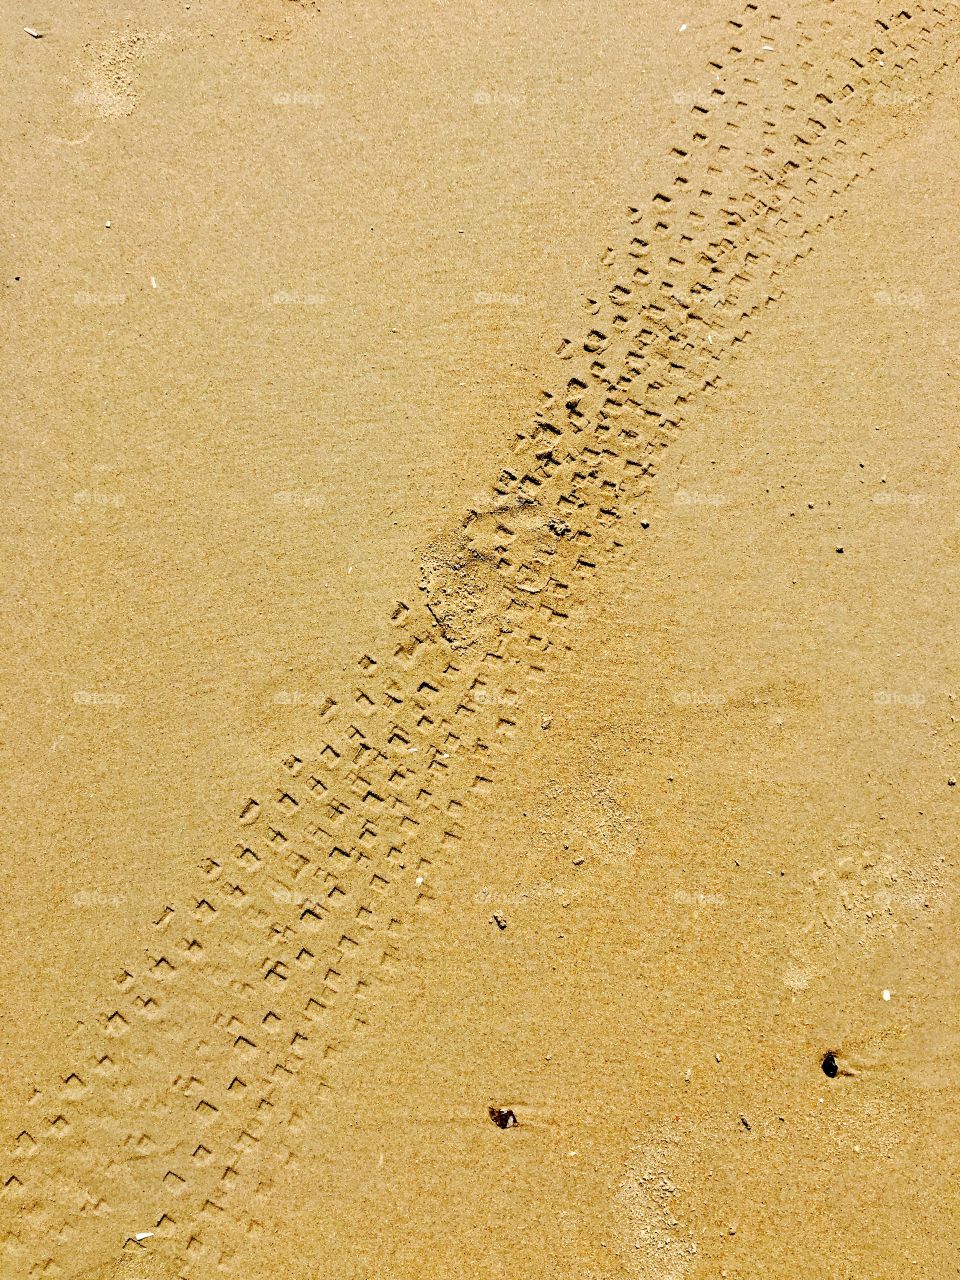 Bike tracks on sandy beach
